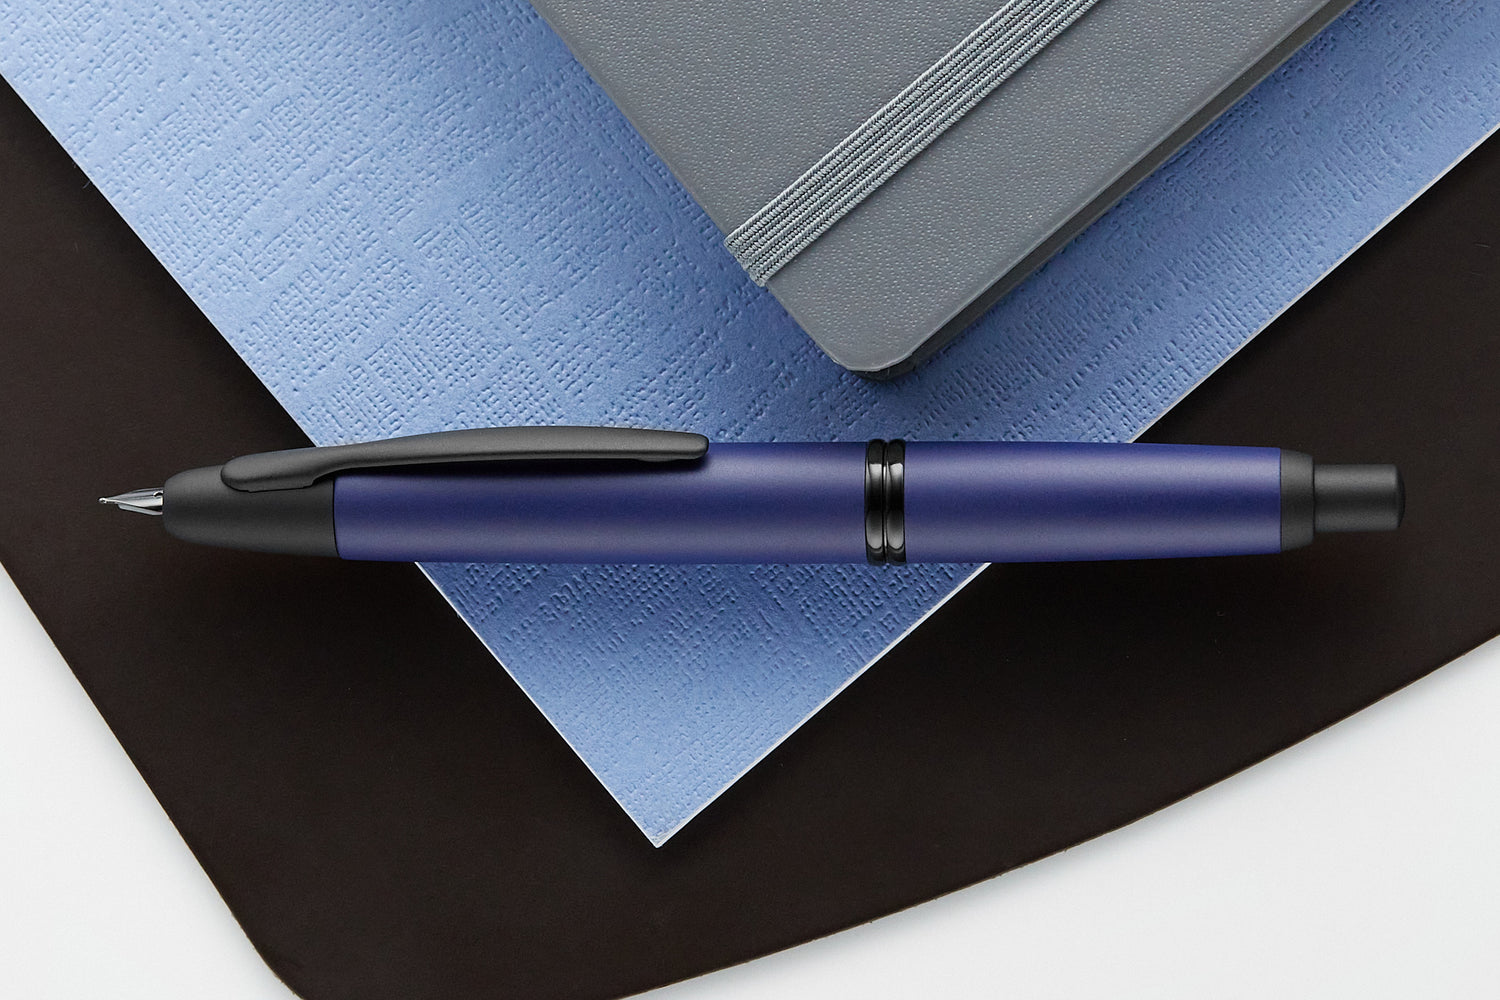 Blue Mark-B-Gone transfer pen — Blackbird Letterpress